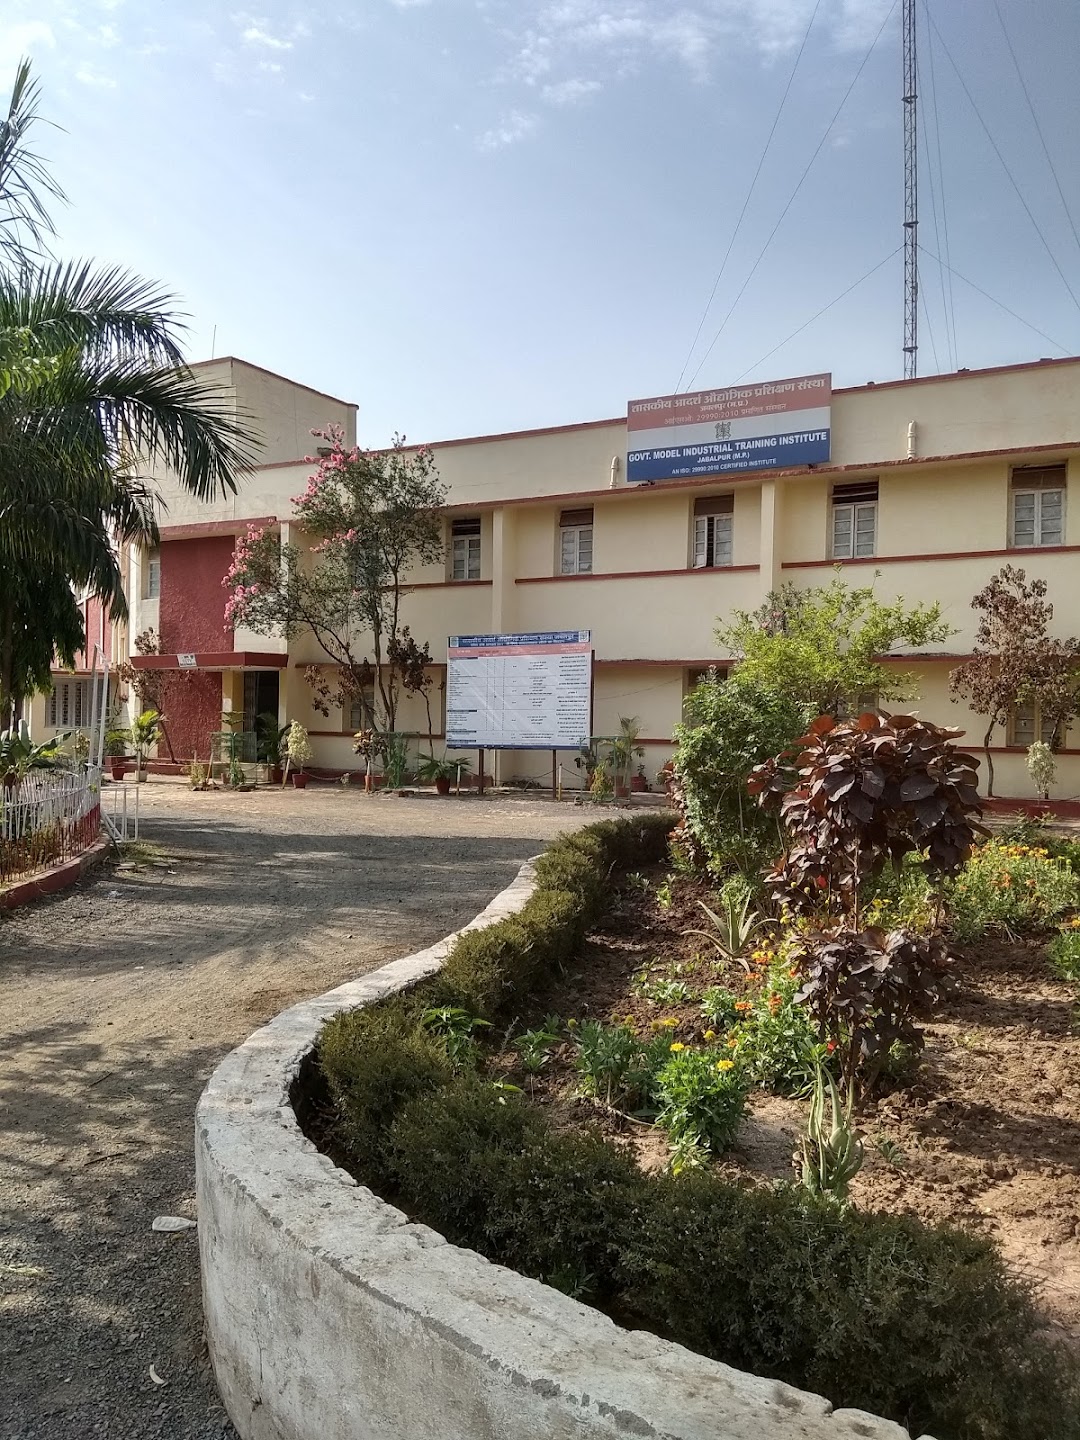 Govt.Model Industrial Traning Institute. Jabalpur